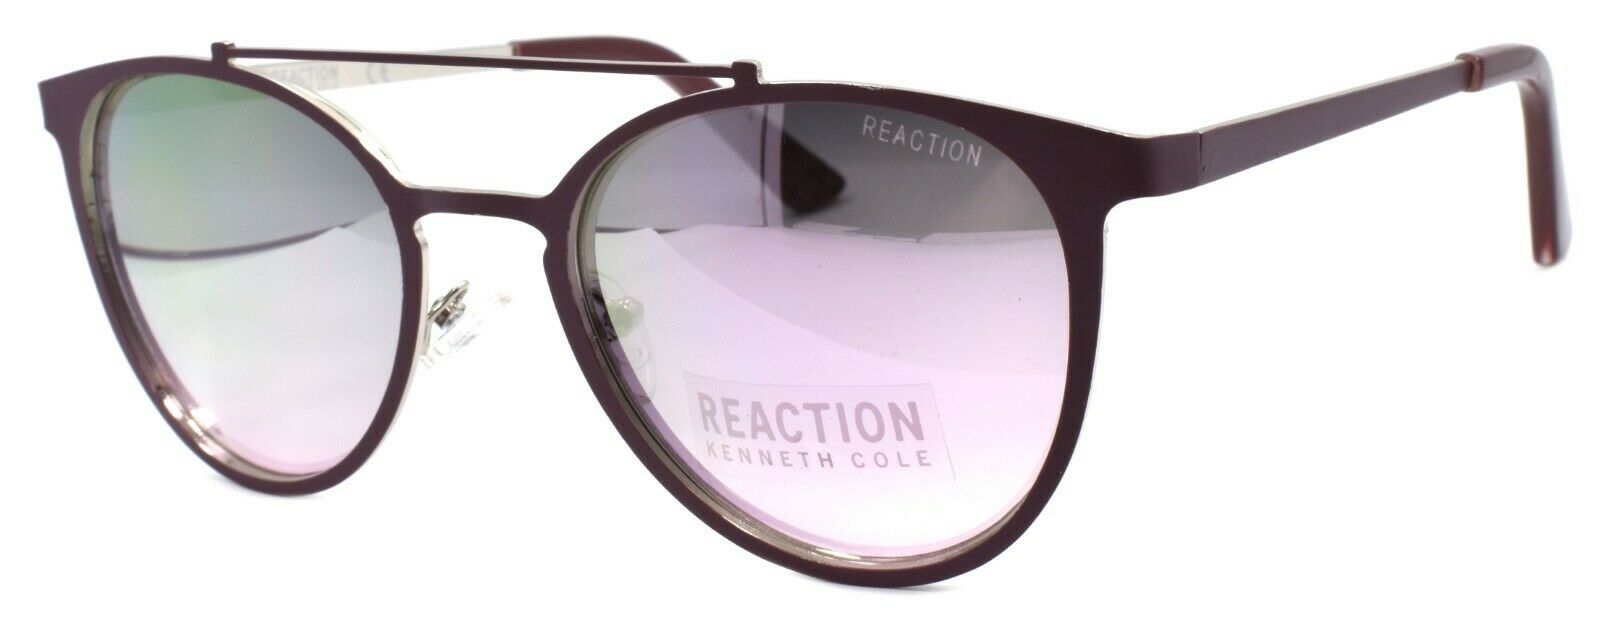 1-Kenneth Cole Reaction KC1315 67U Women Sunglasses Aviator Matte Red / Mirrored-664689981373-IKSpecs